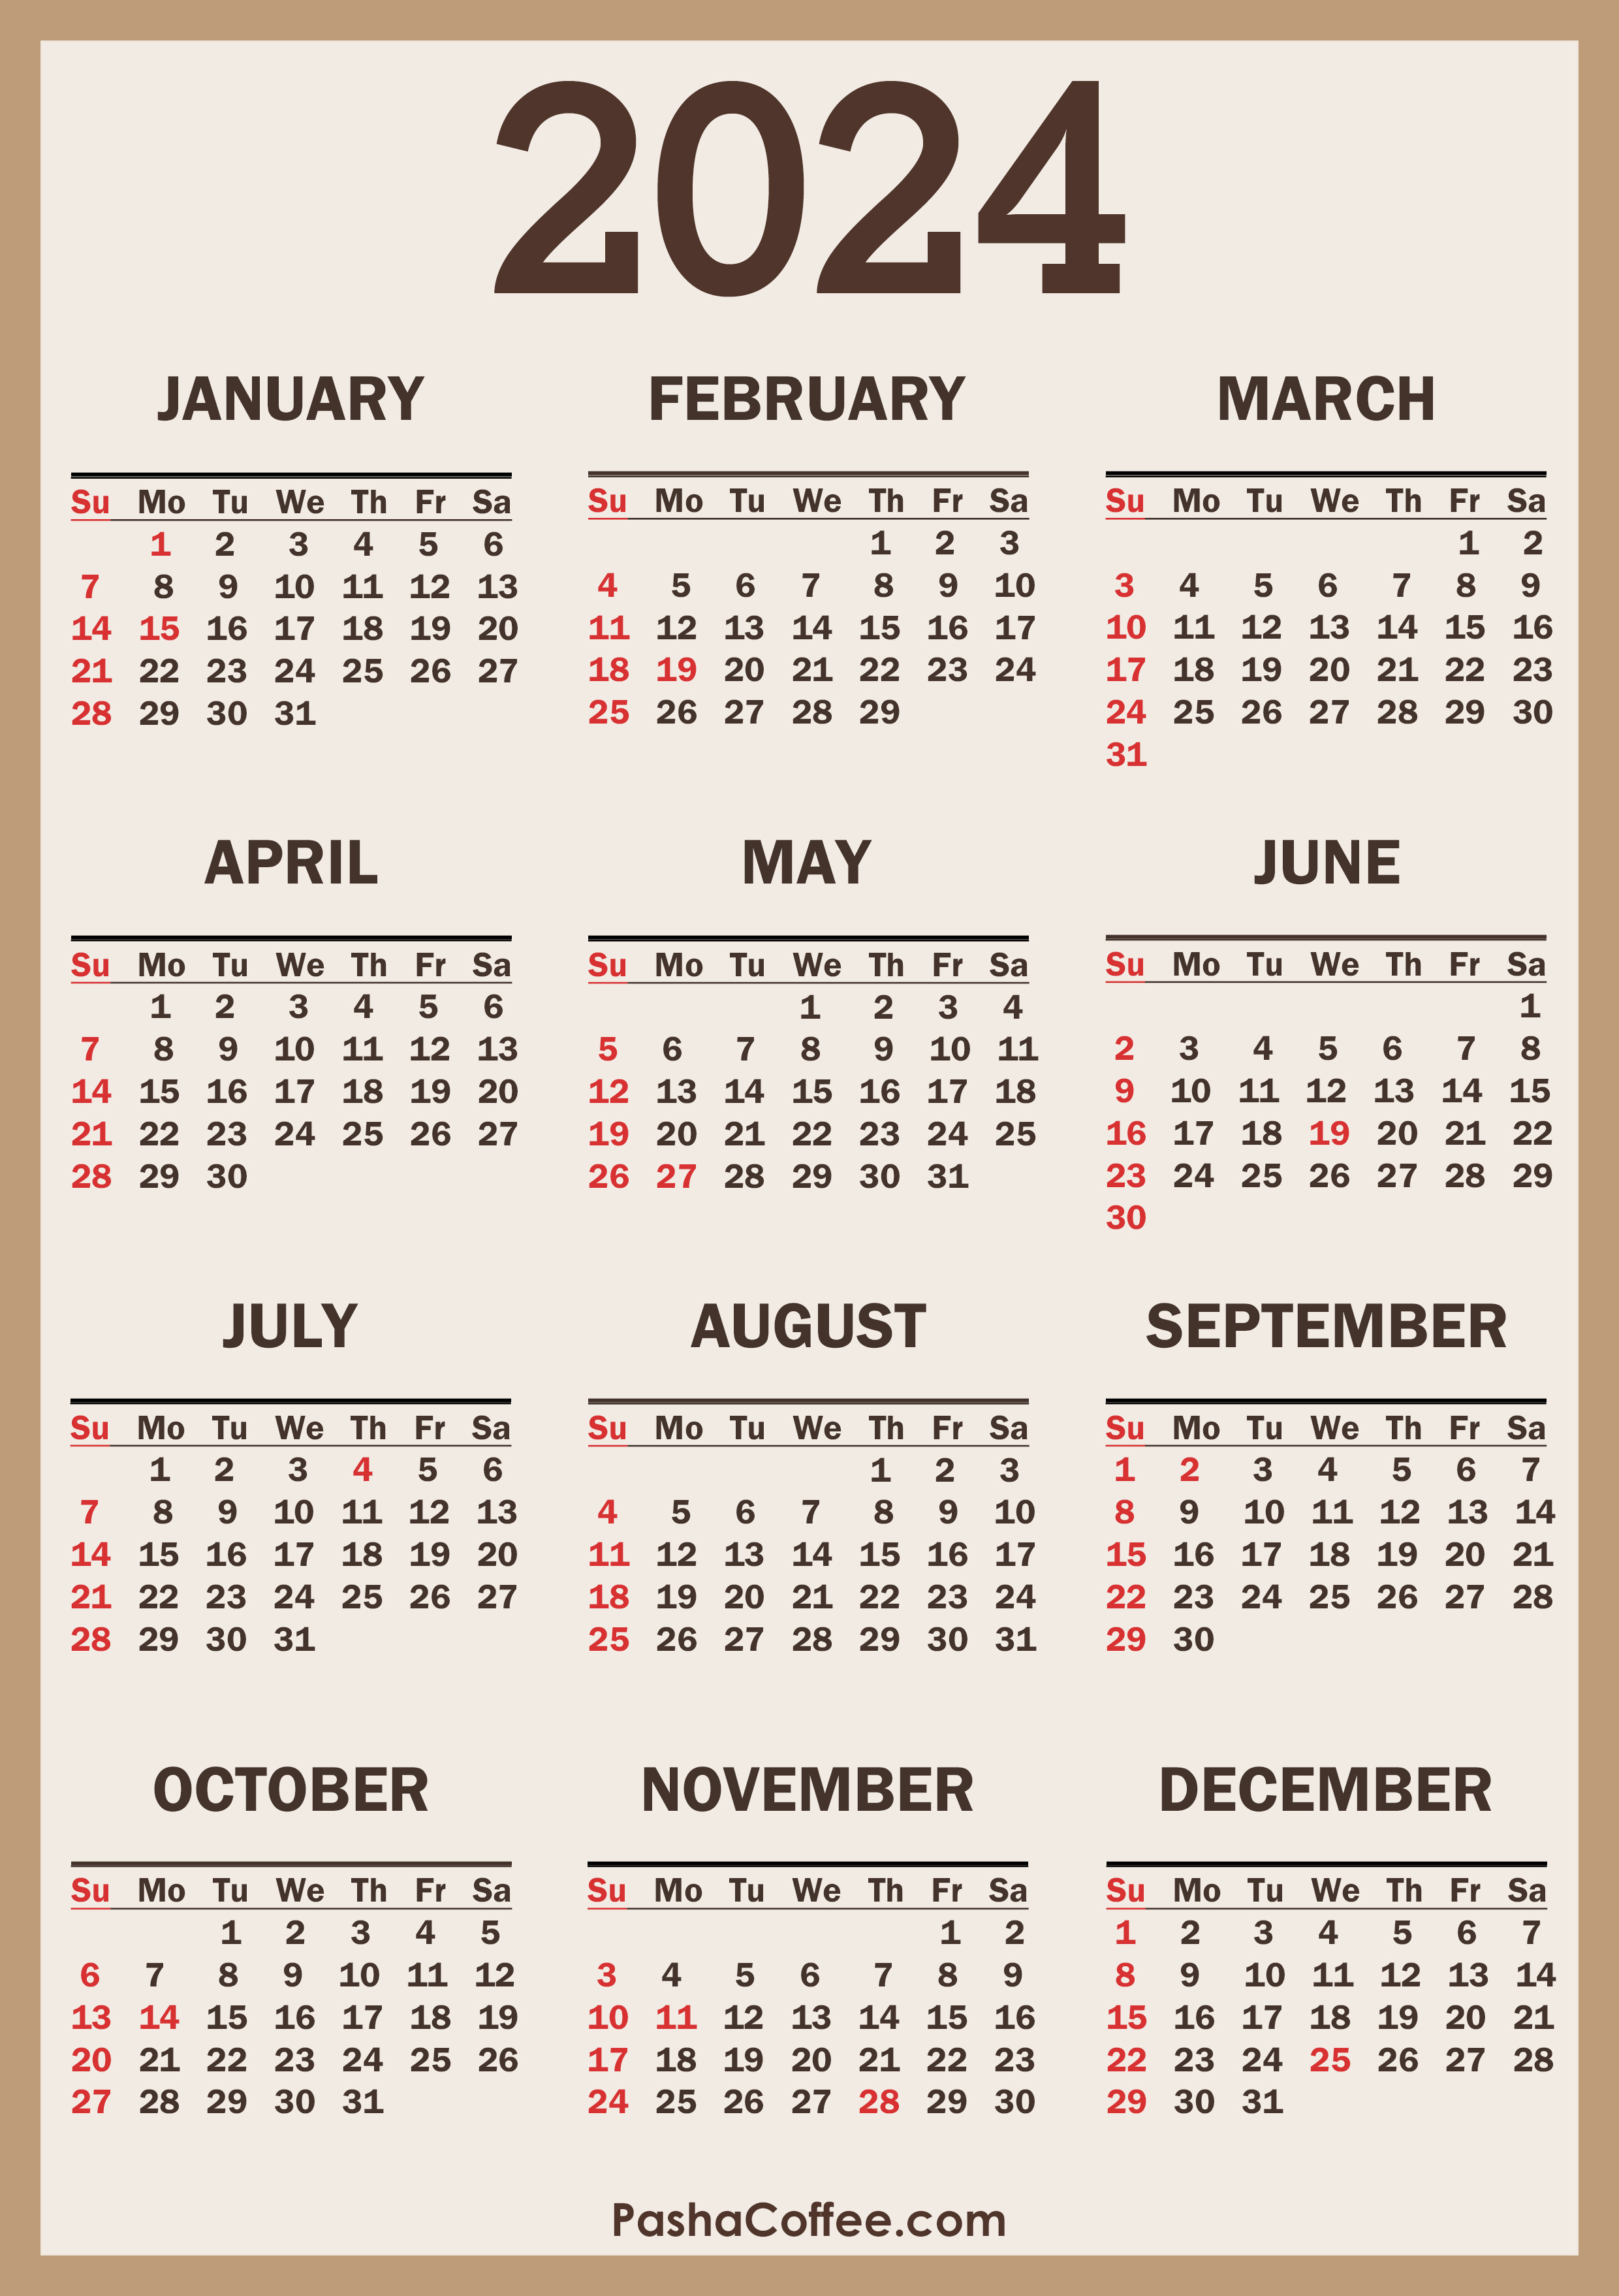 2024 Yearly Calendar Printable Full Year Pdf Download Lunar Calendar 2024